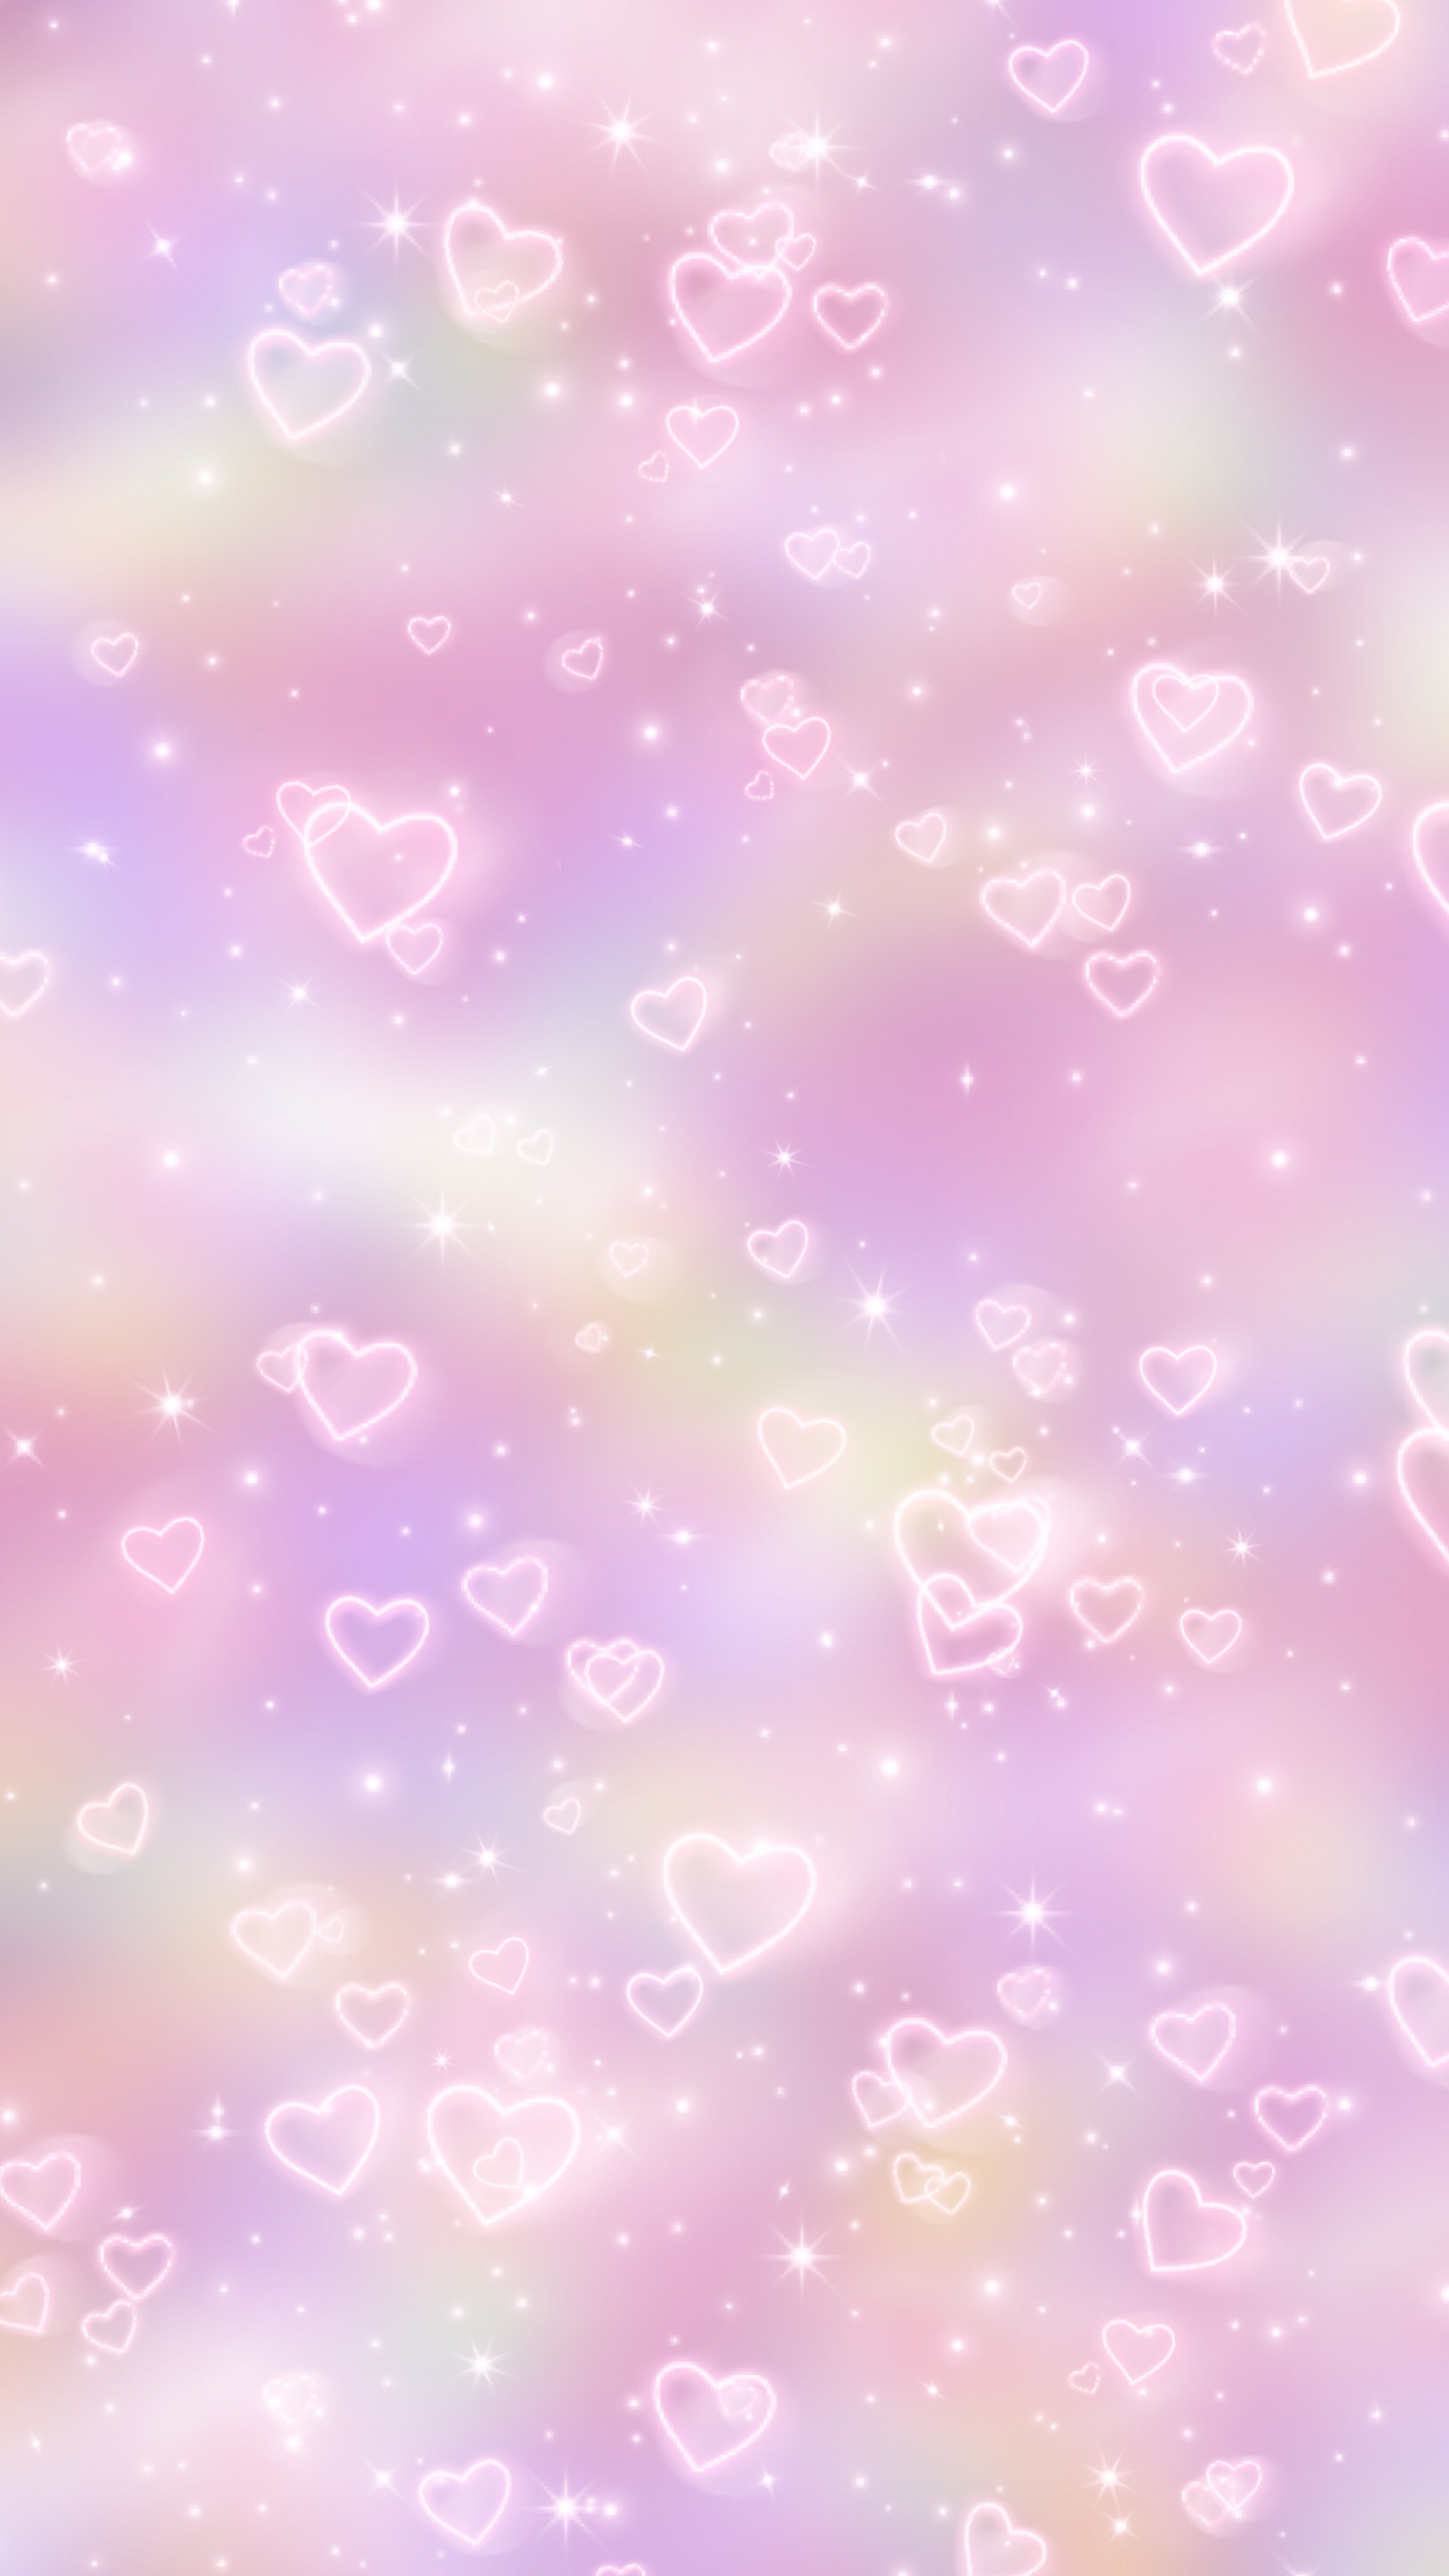 freetoedit pink background heart love wallpaper cute...